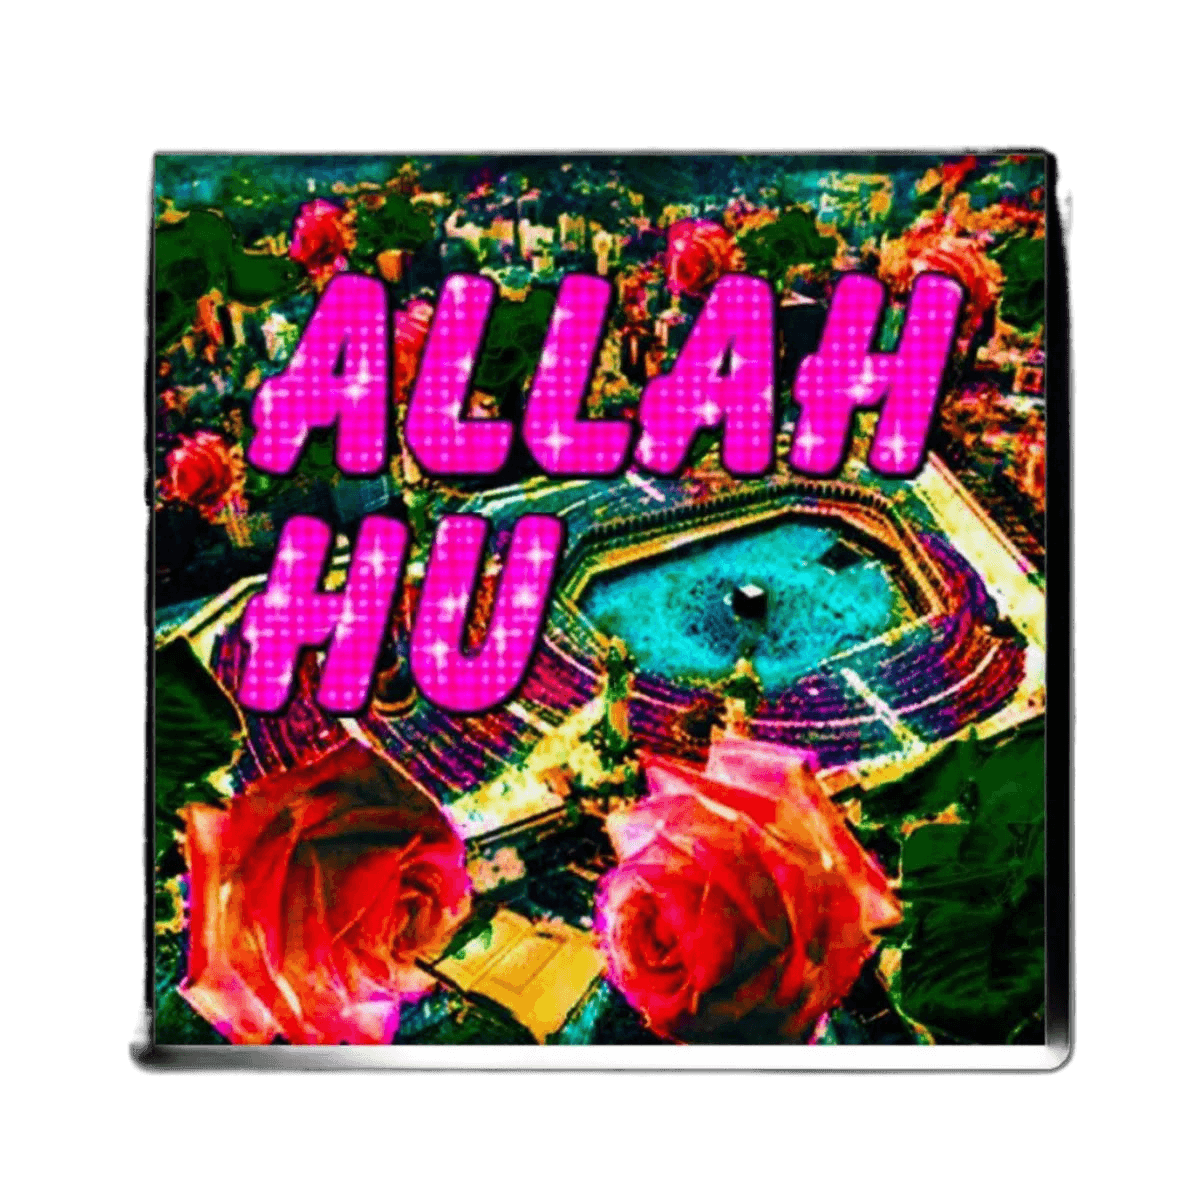 Allah Hu Sticker